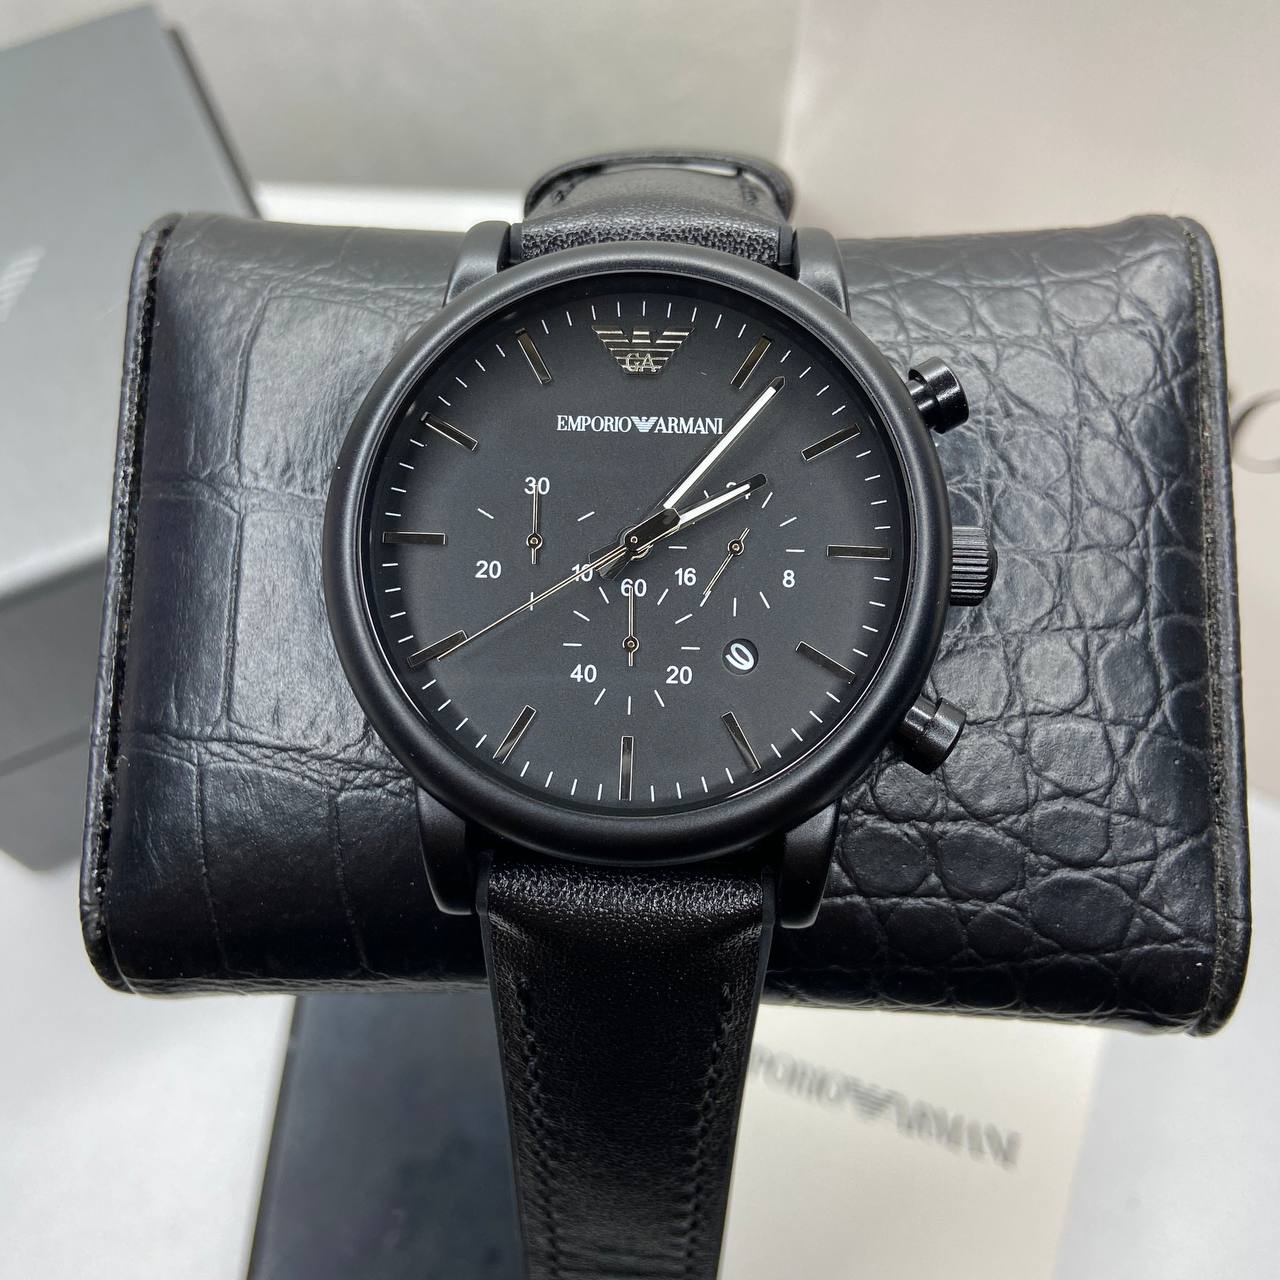 Quartz Brand Emporio Heavni Chronograph Armani Men\'s – Global Watch AR1970 Leather Black